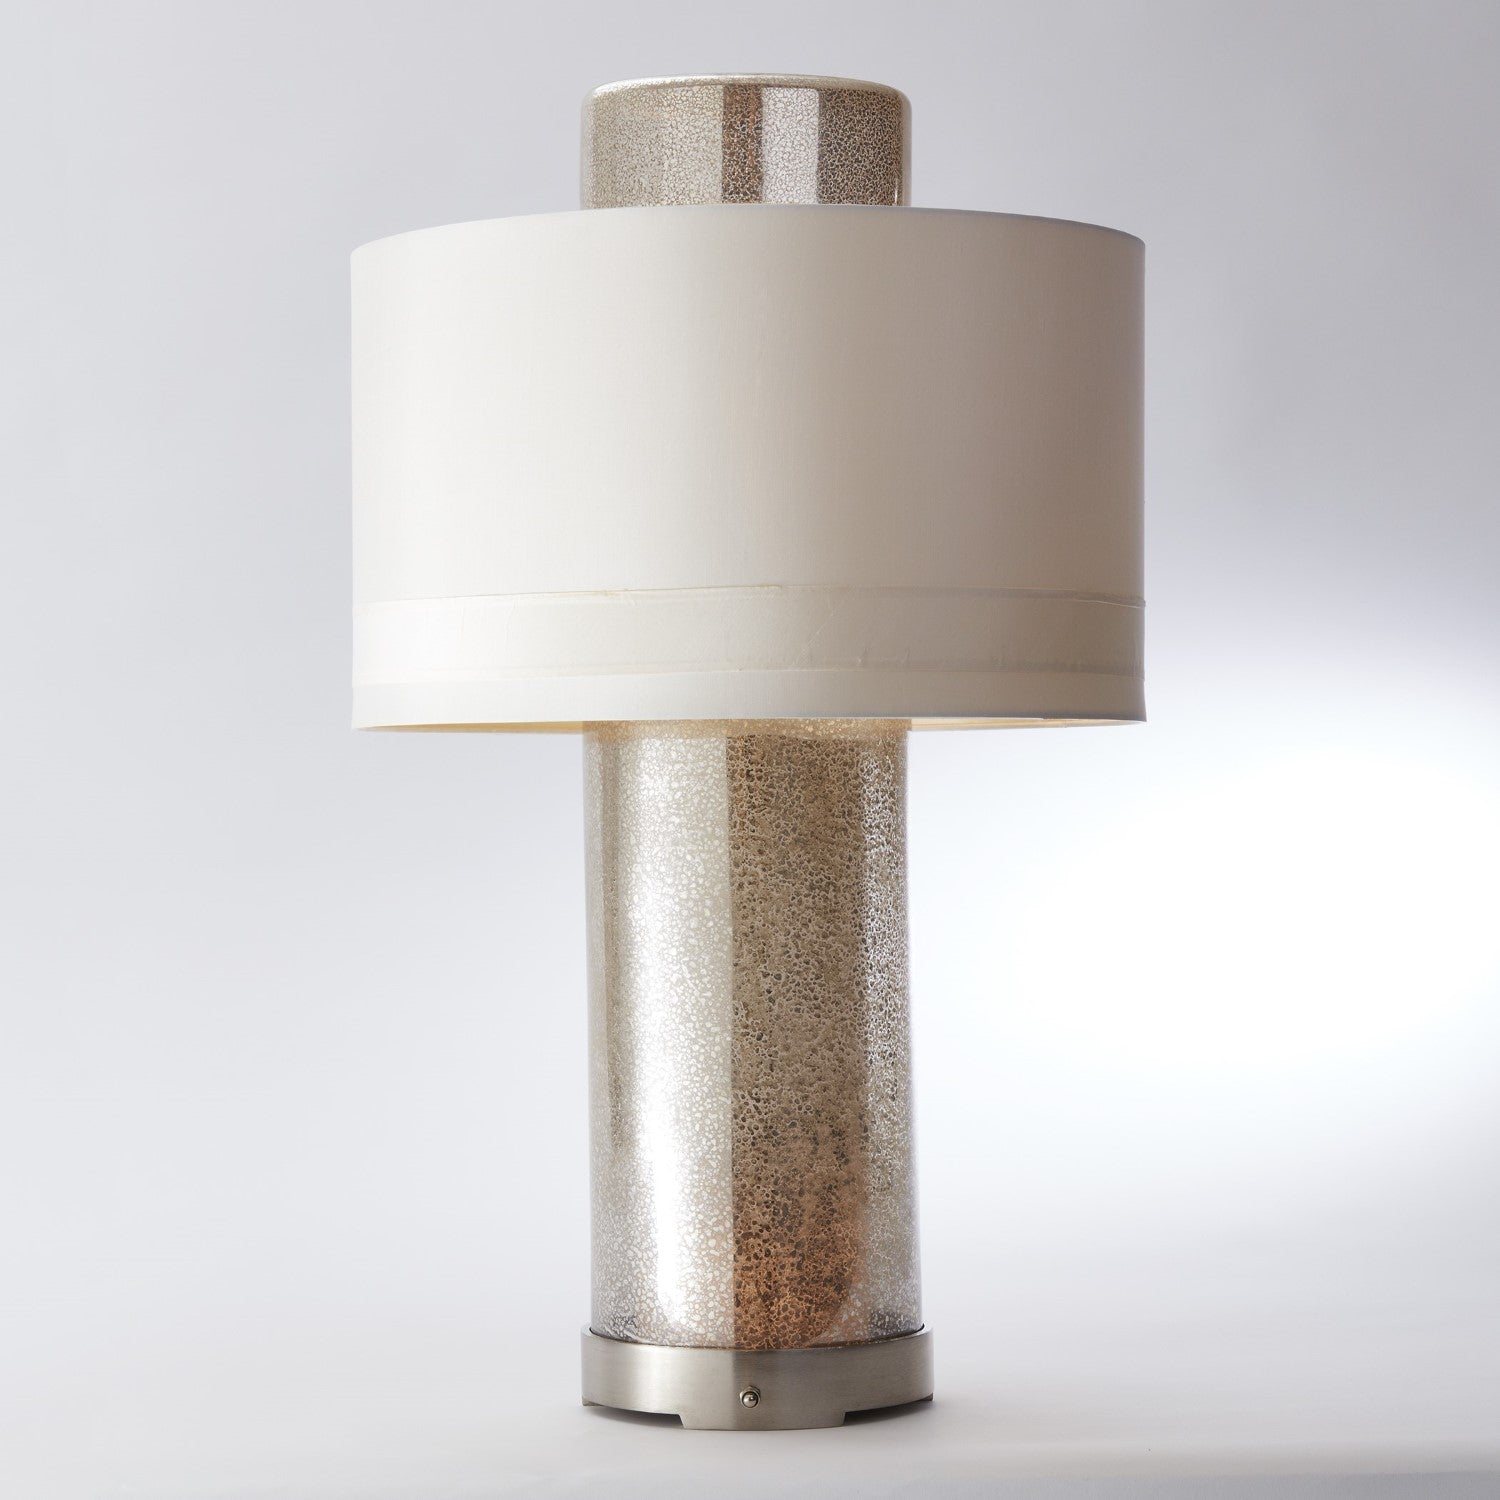 Lighthouse Lamp - Grats Decor Interior Design & Build Inc.